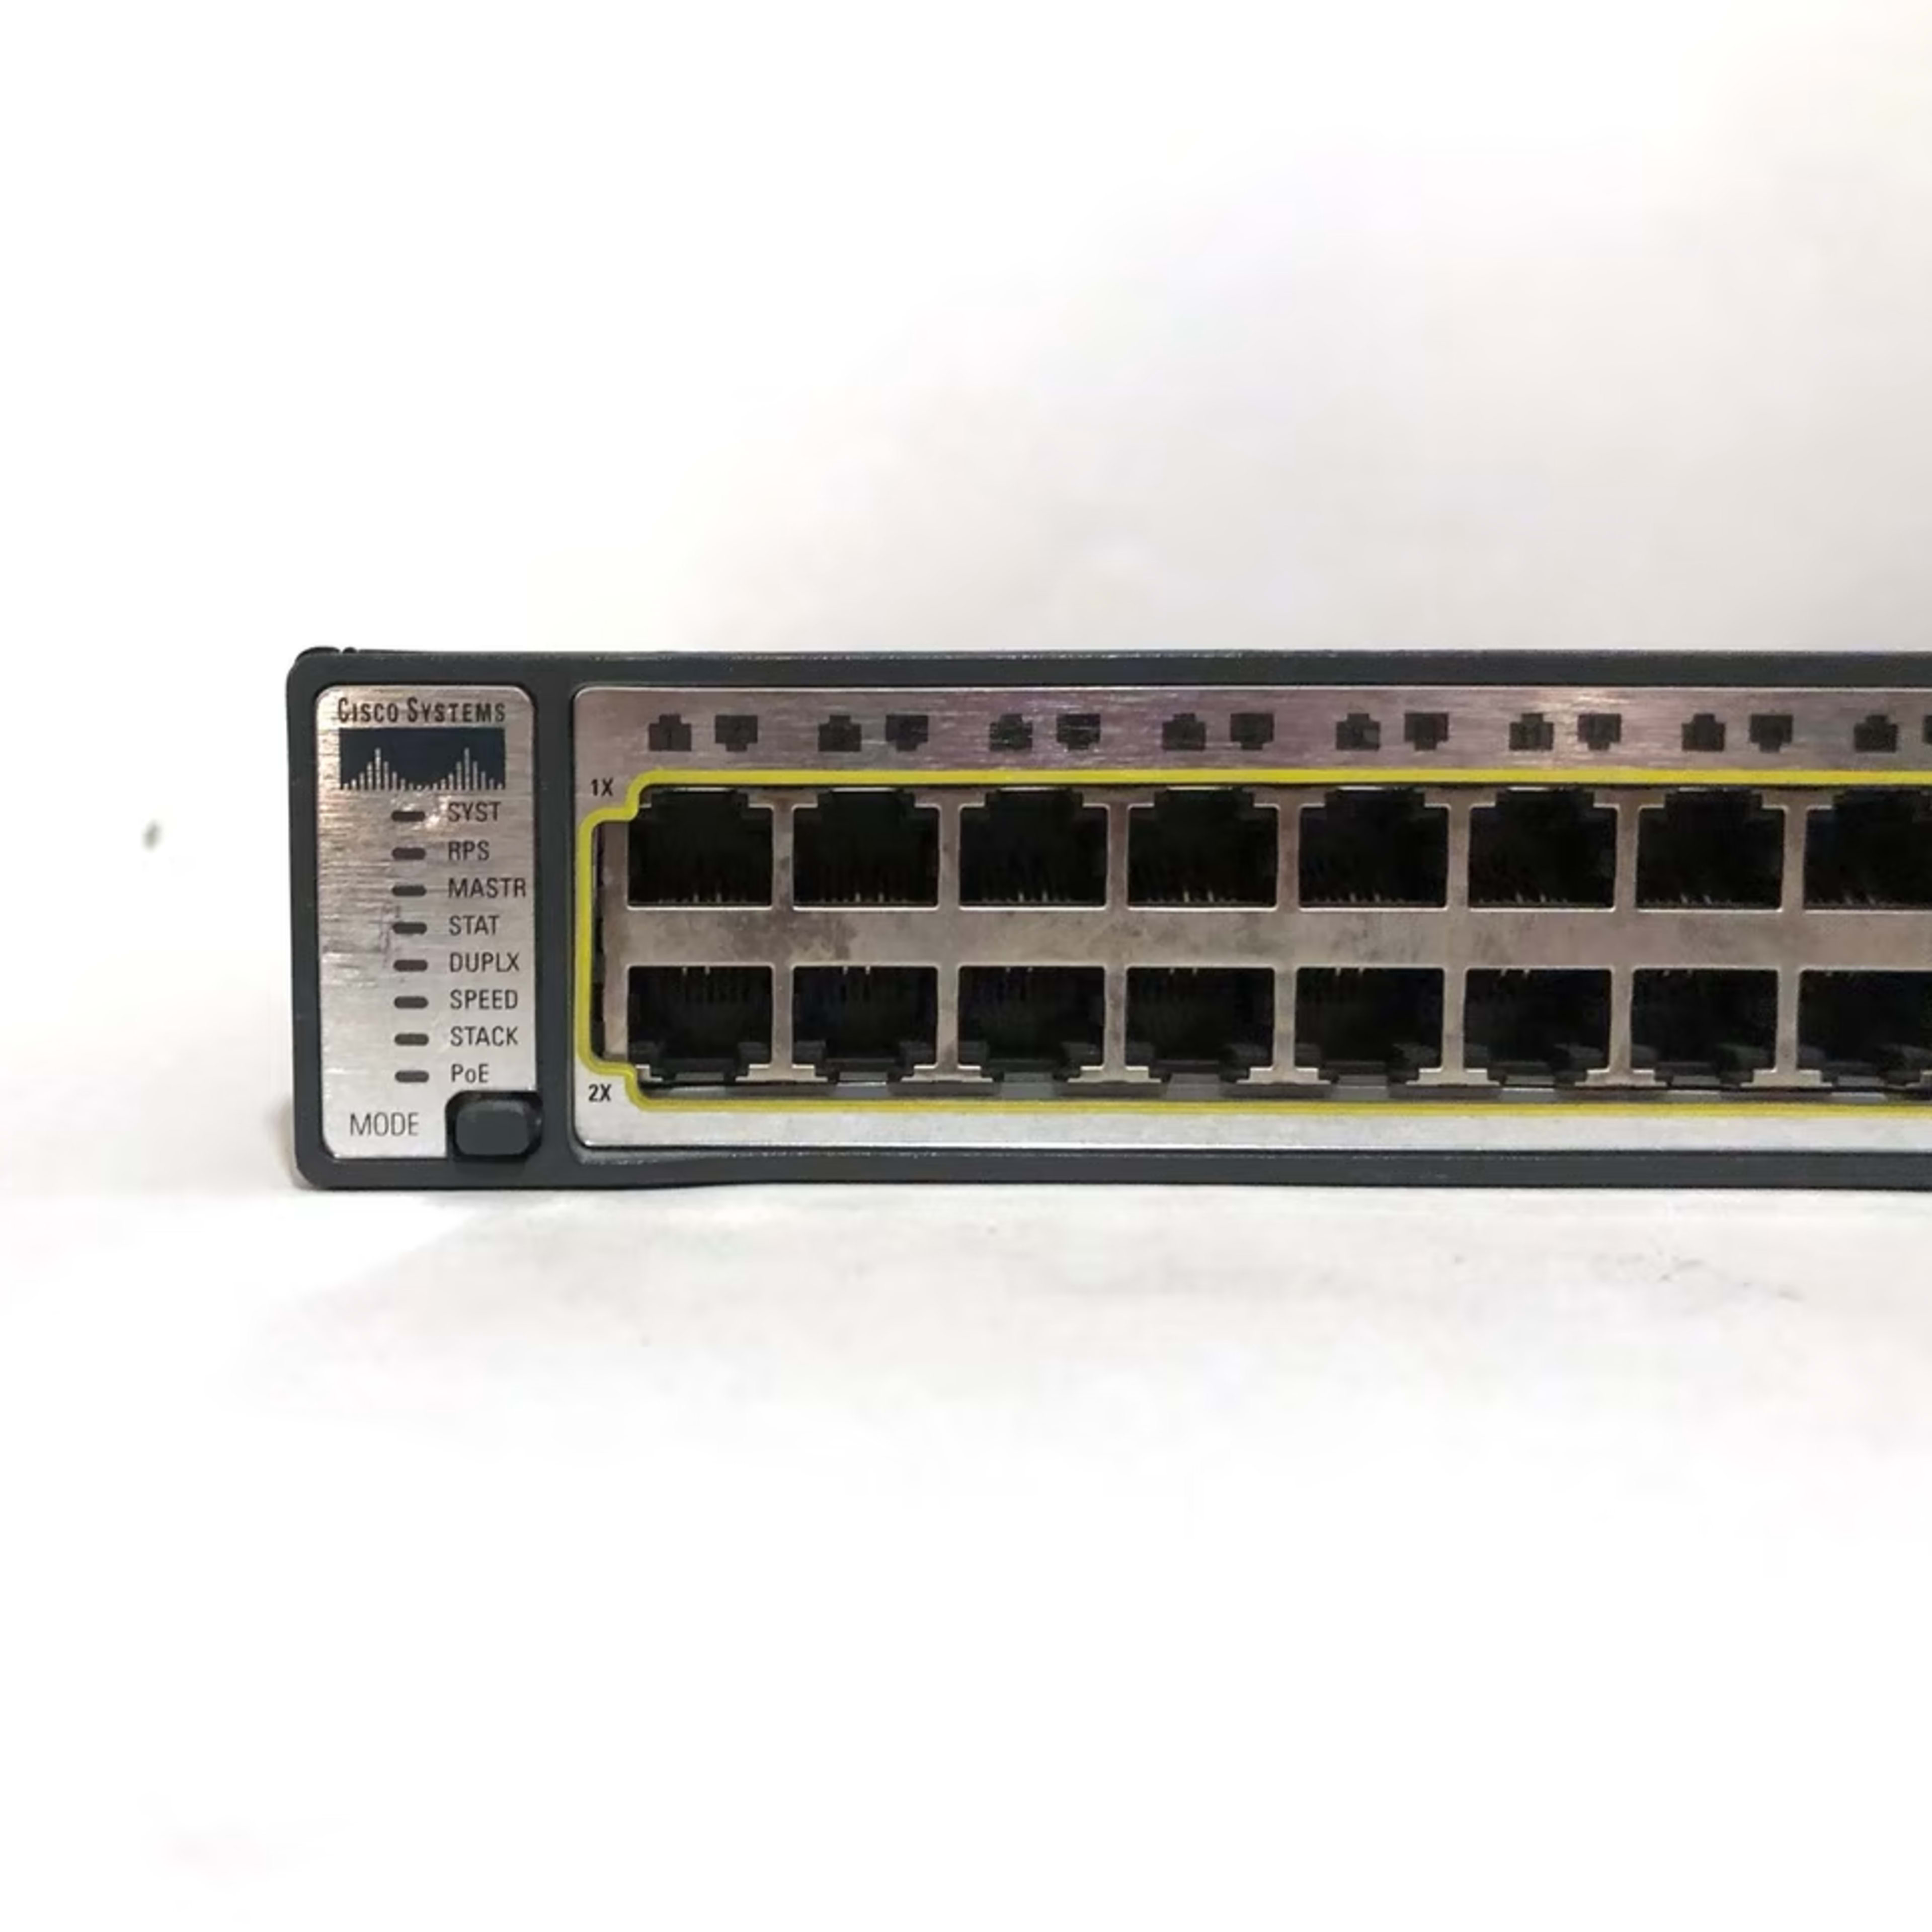 Cisco Catalyst 3750 Series PoE-48 48Port Ethernet Switch